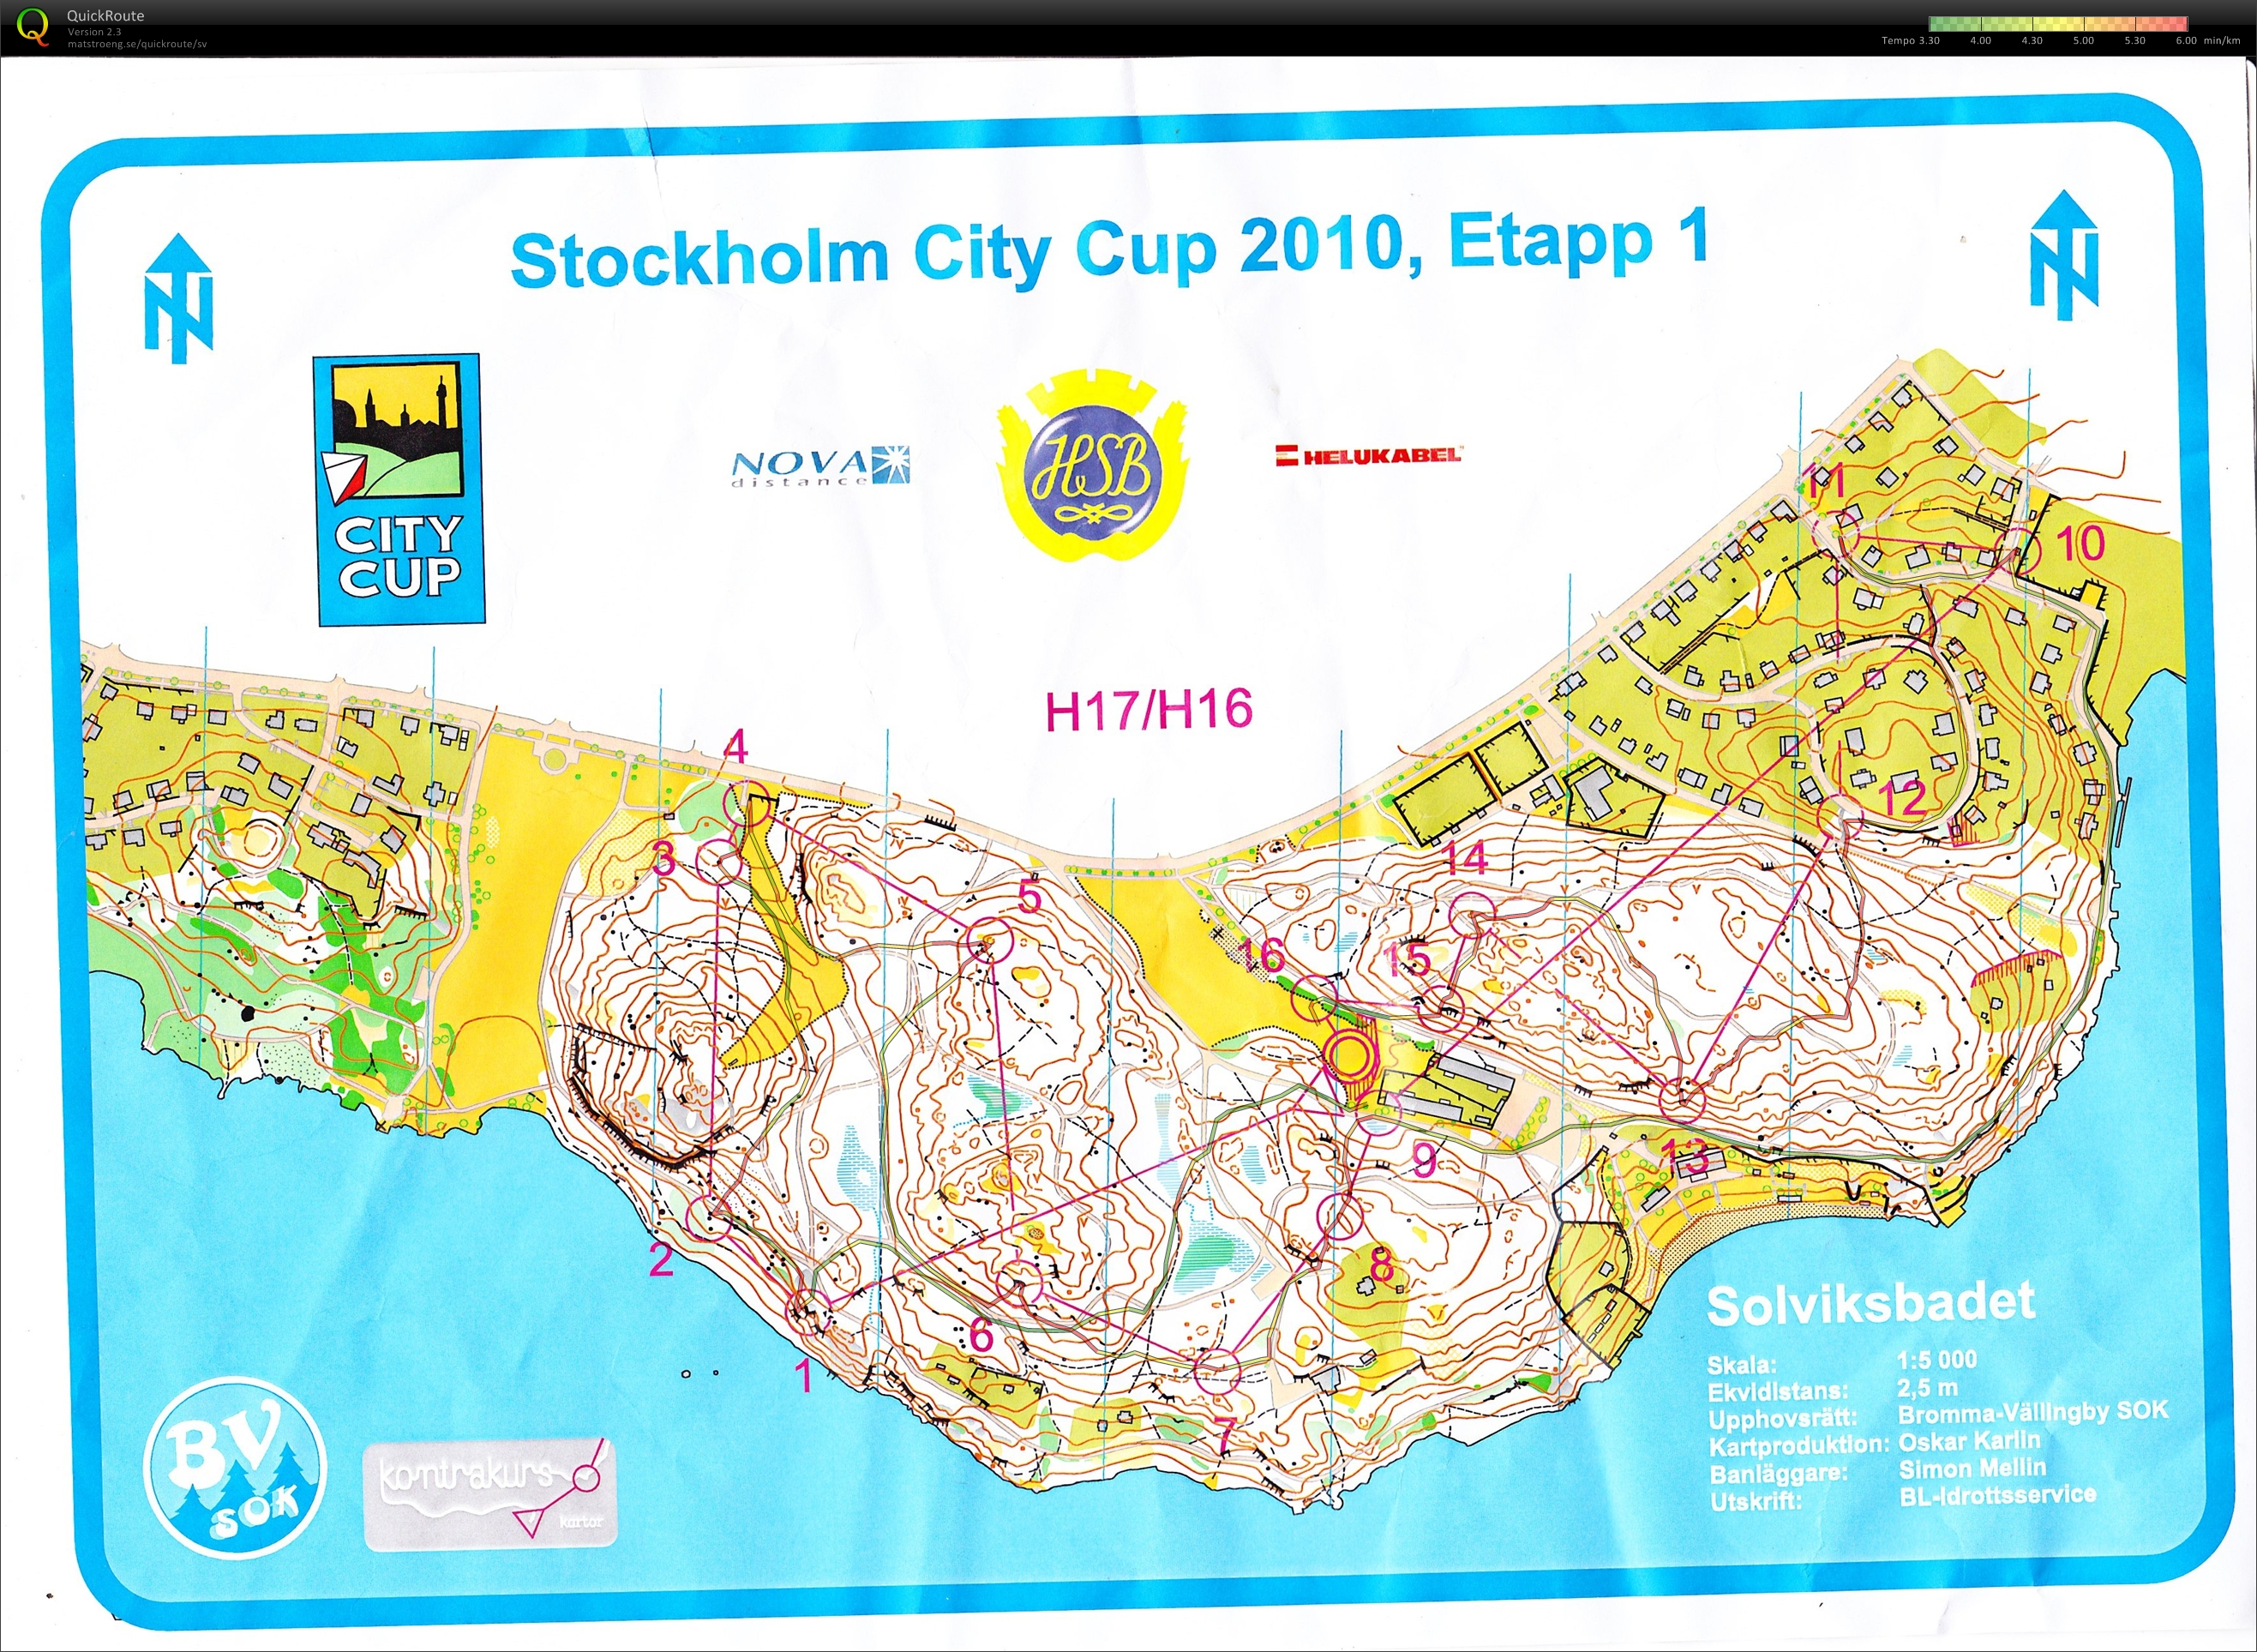 Stockholm City Cup, etapp 1 (19/05/2010)